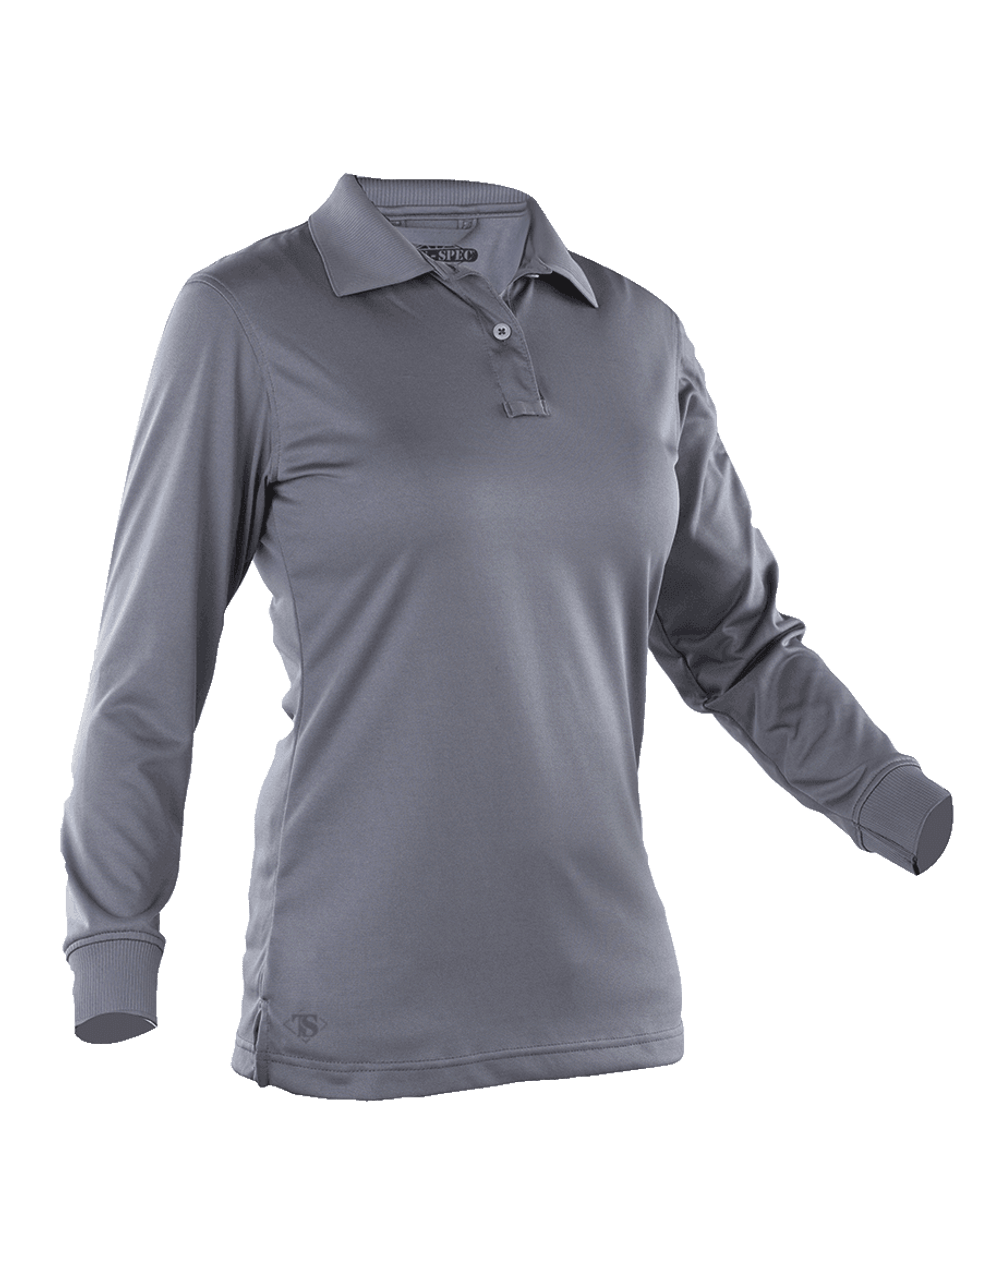 nsendm Womens Top Casual Short Sleeve Crew Neck T Shirt 100 Polyester  Shirts Women Shirt Grey XX-Large 